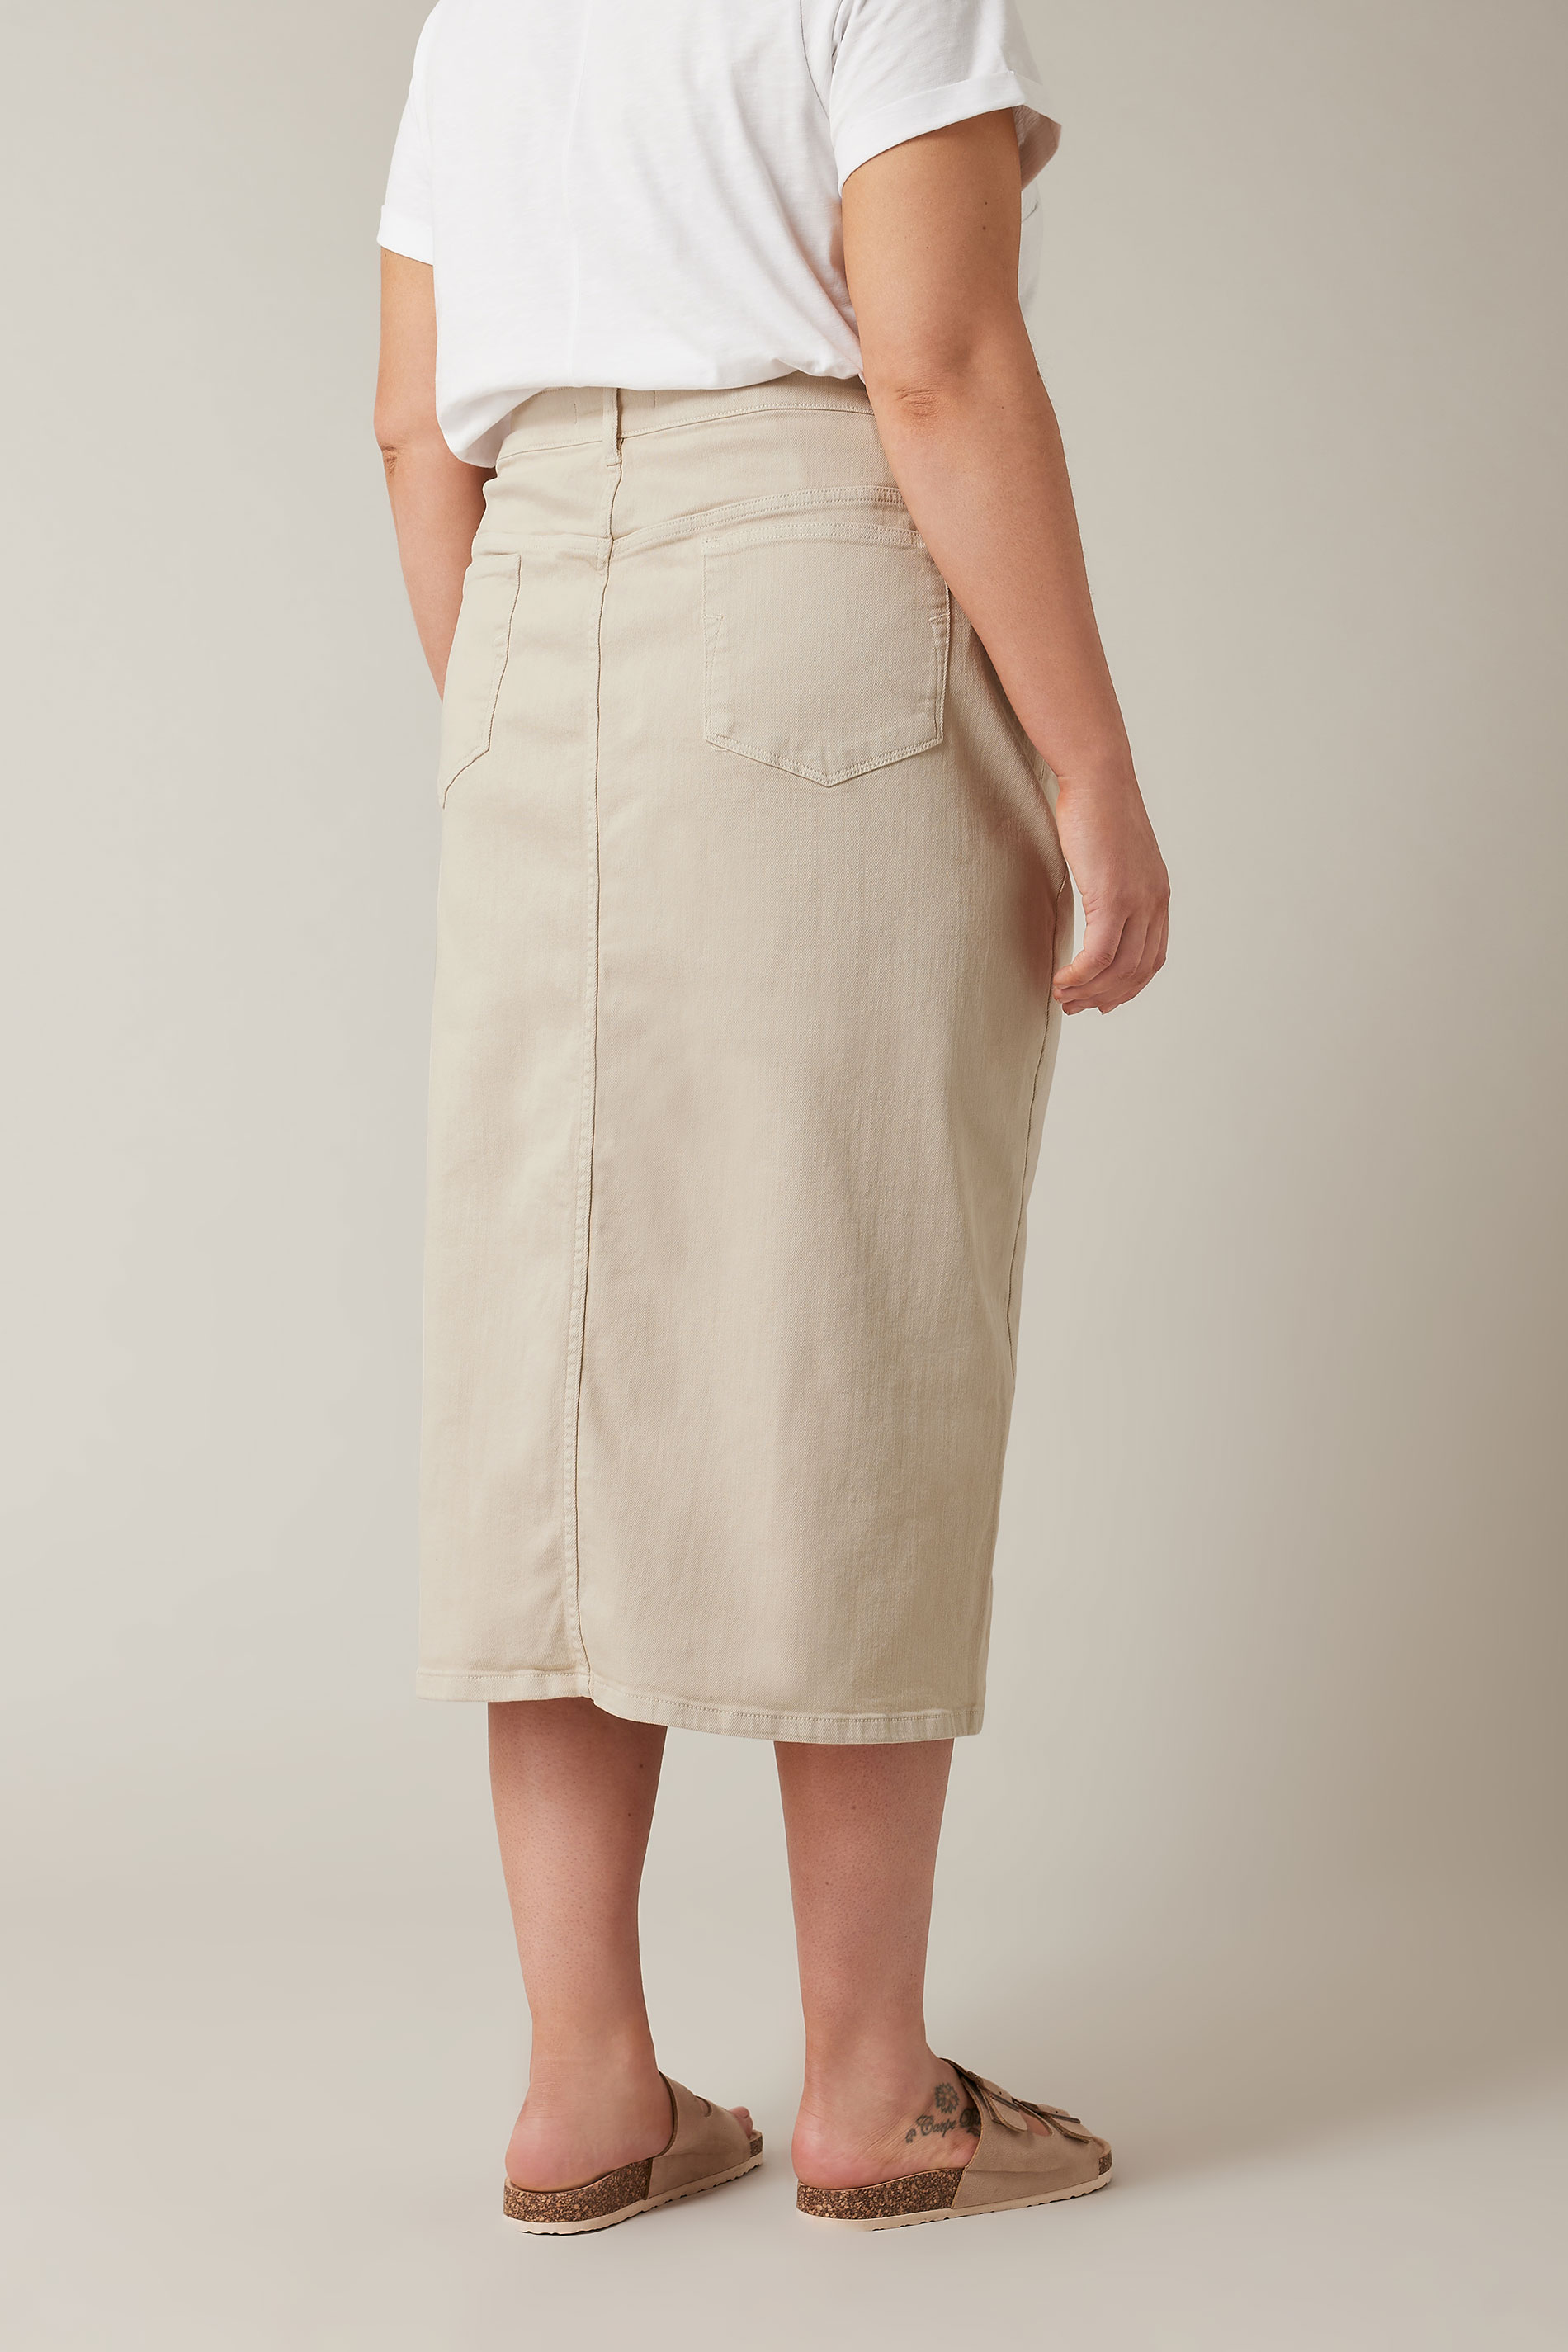 EVANS Plus Size Natural Cream Ecru Denim Skirt | Evans 3